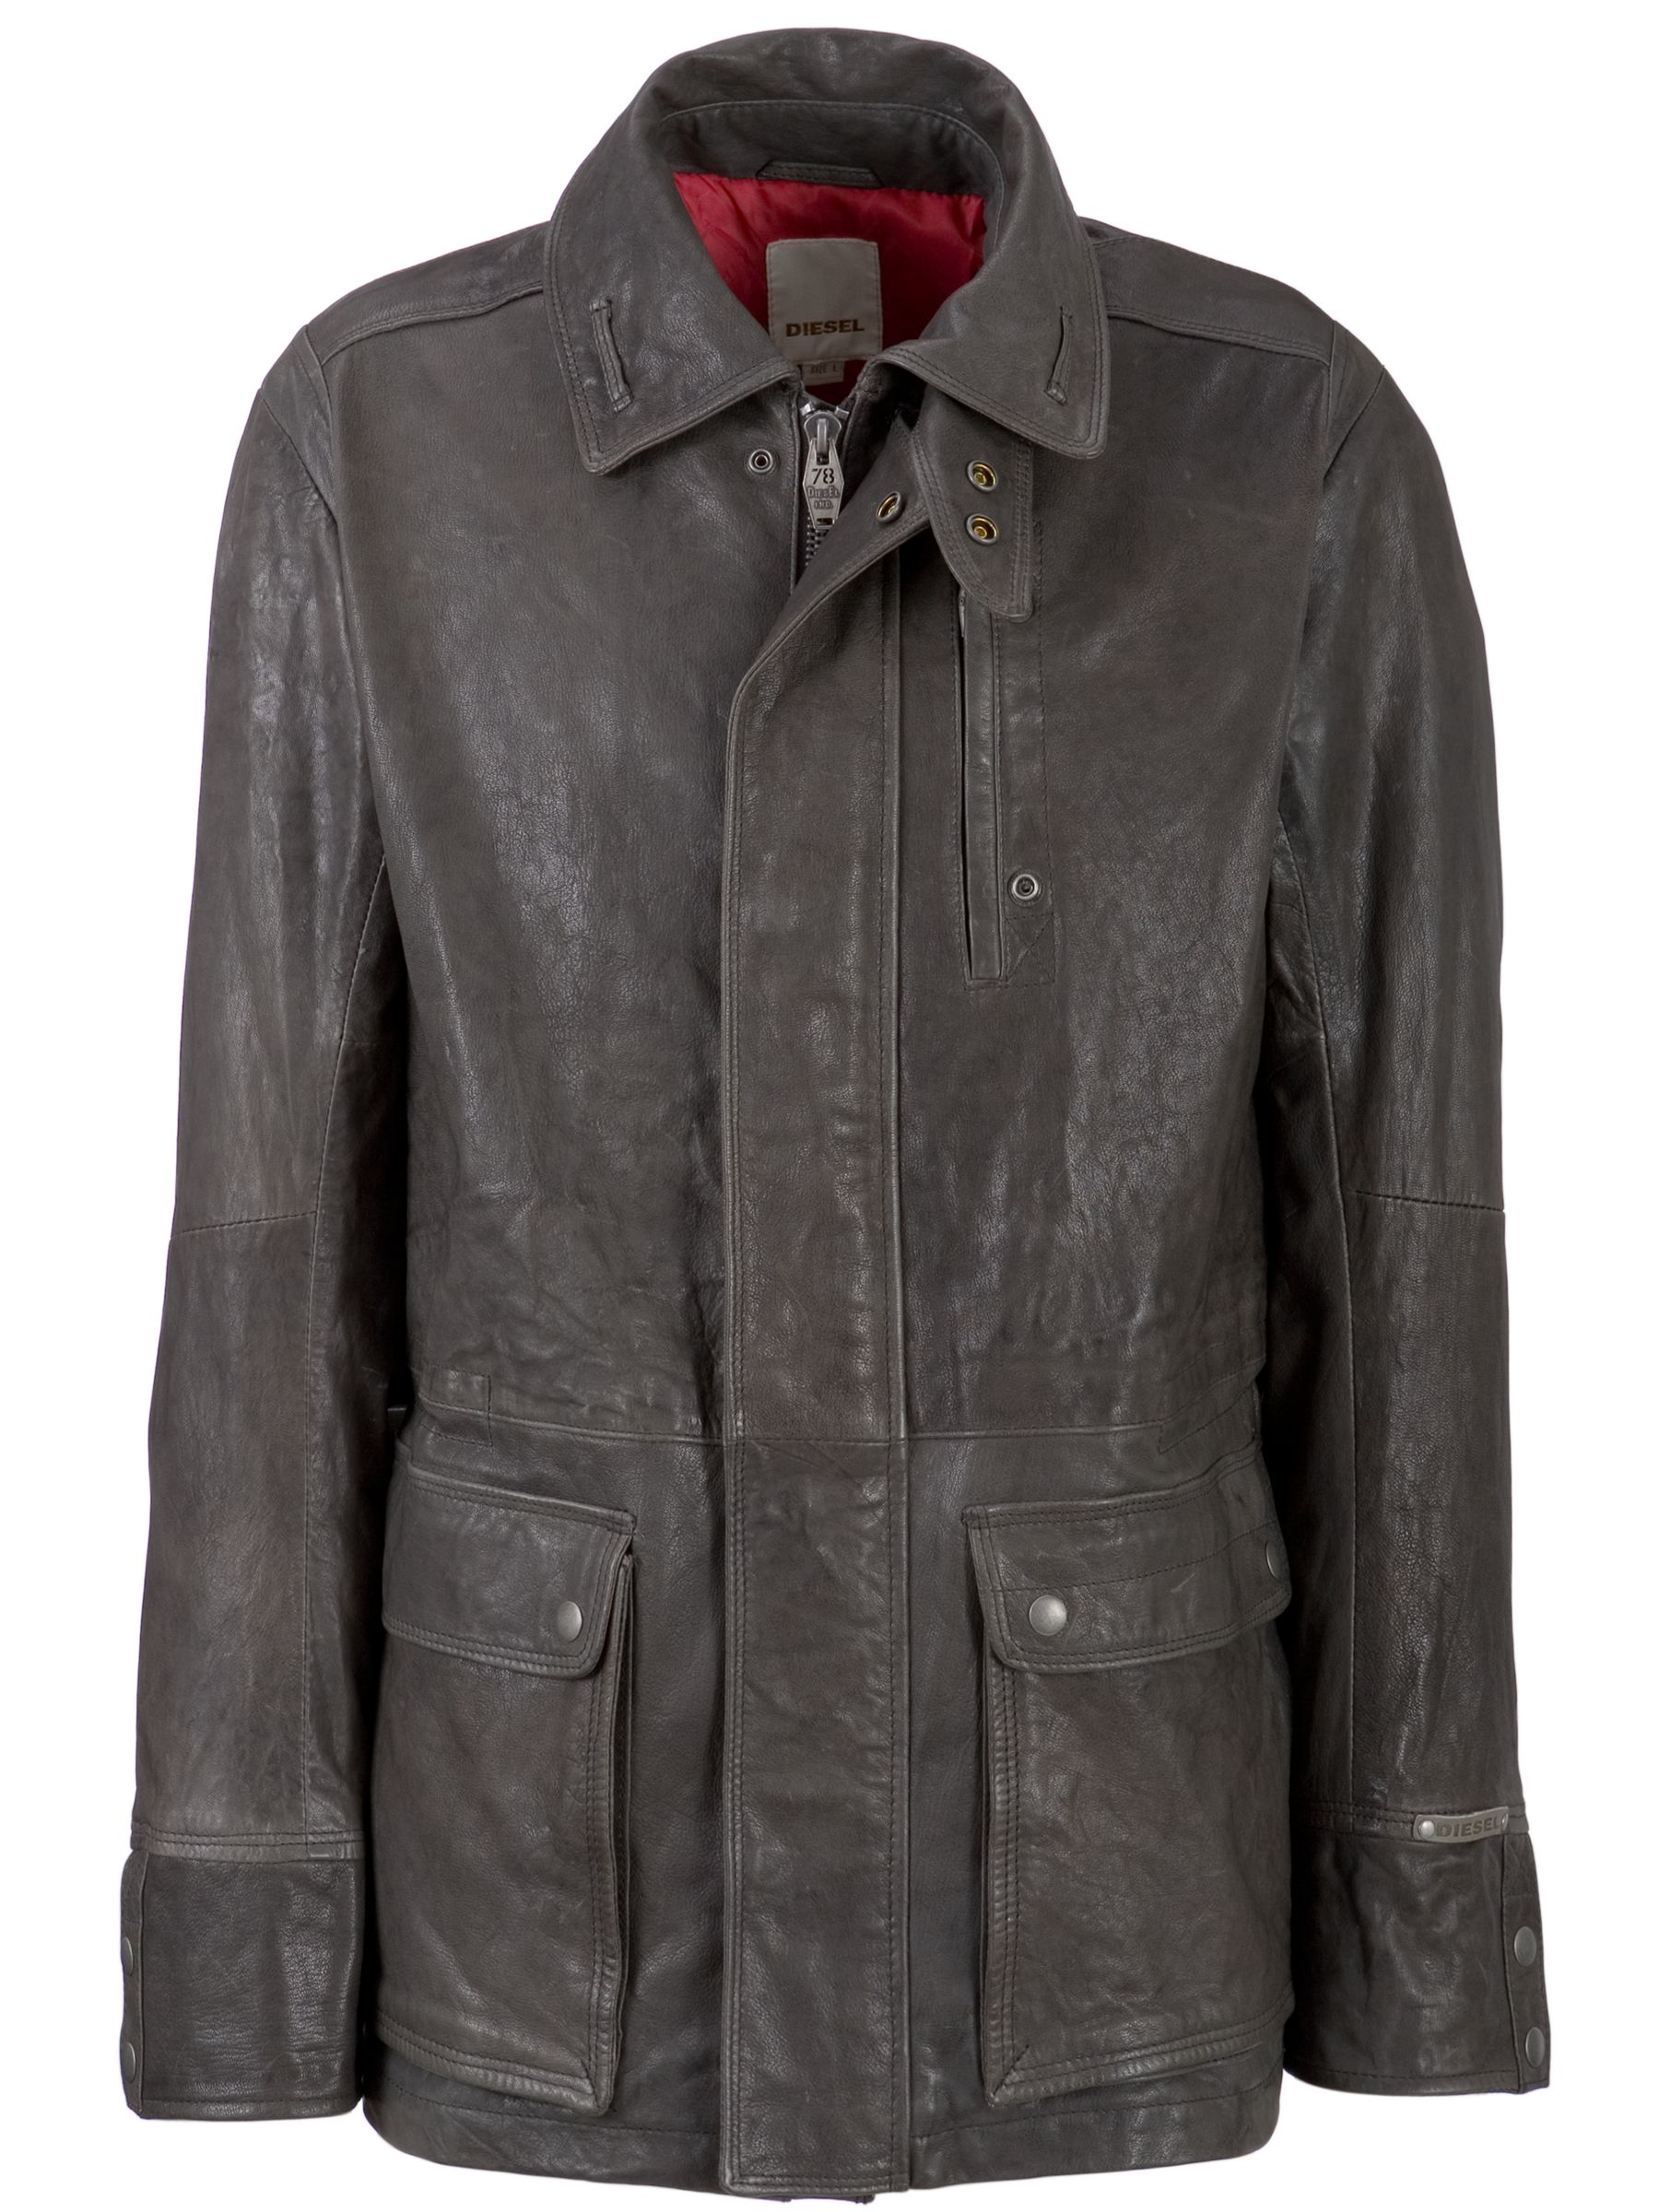 Diesel Lavit Leather Jacket, Dark grey at John Lewis